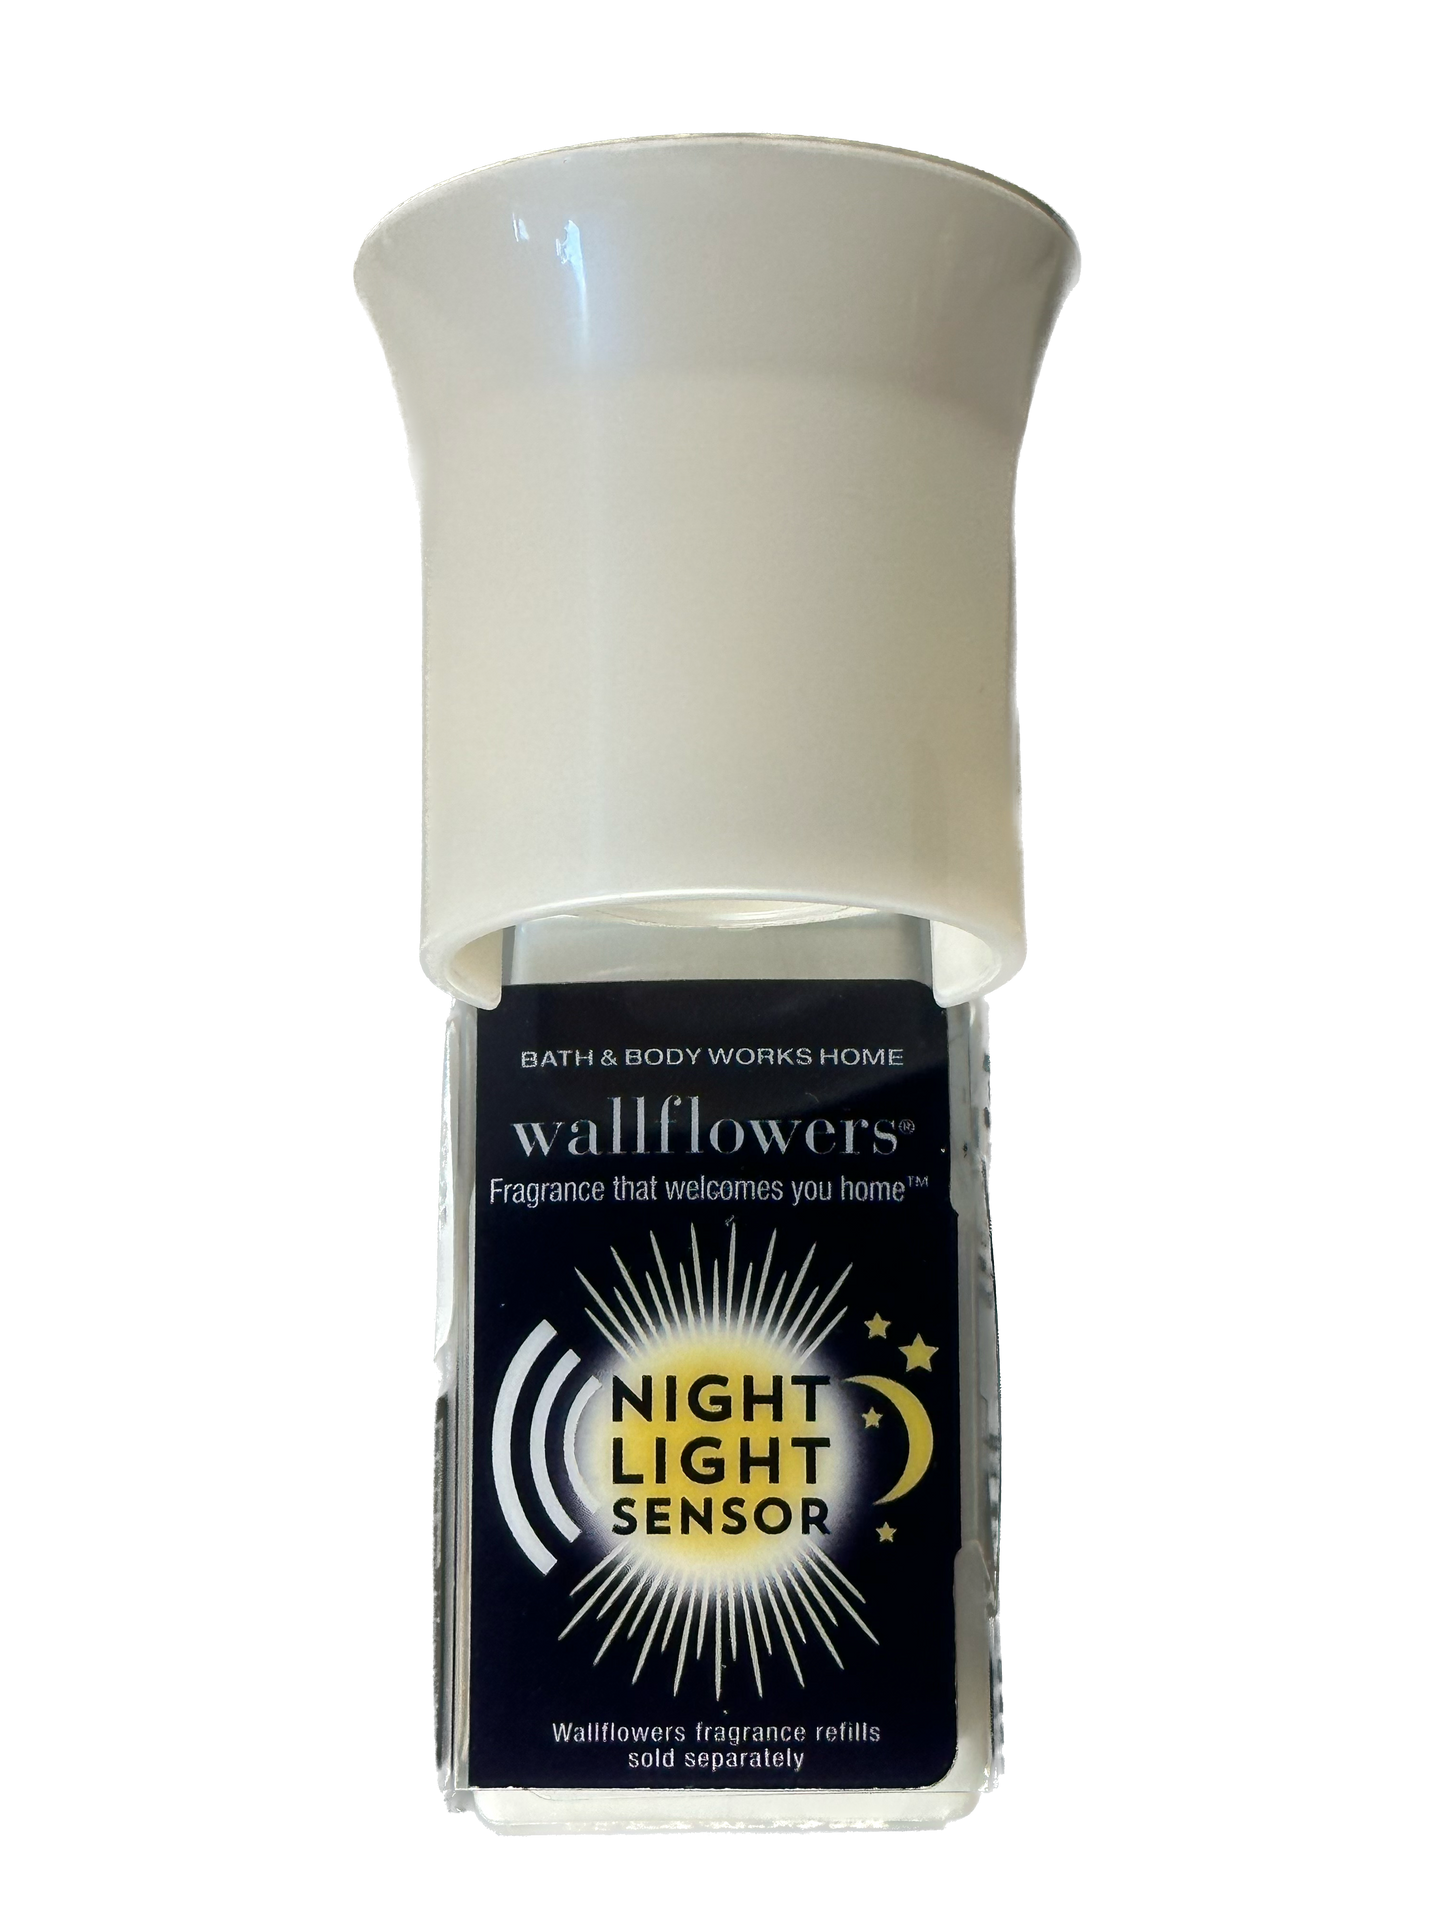 Wallflowers Fragrance Plug